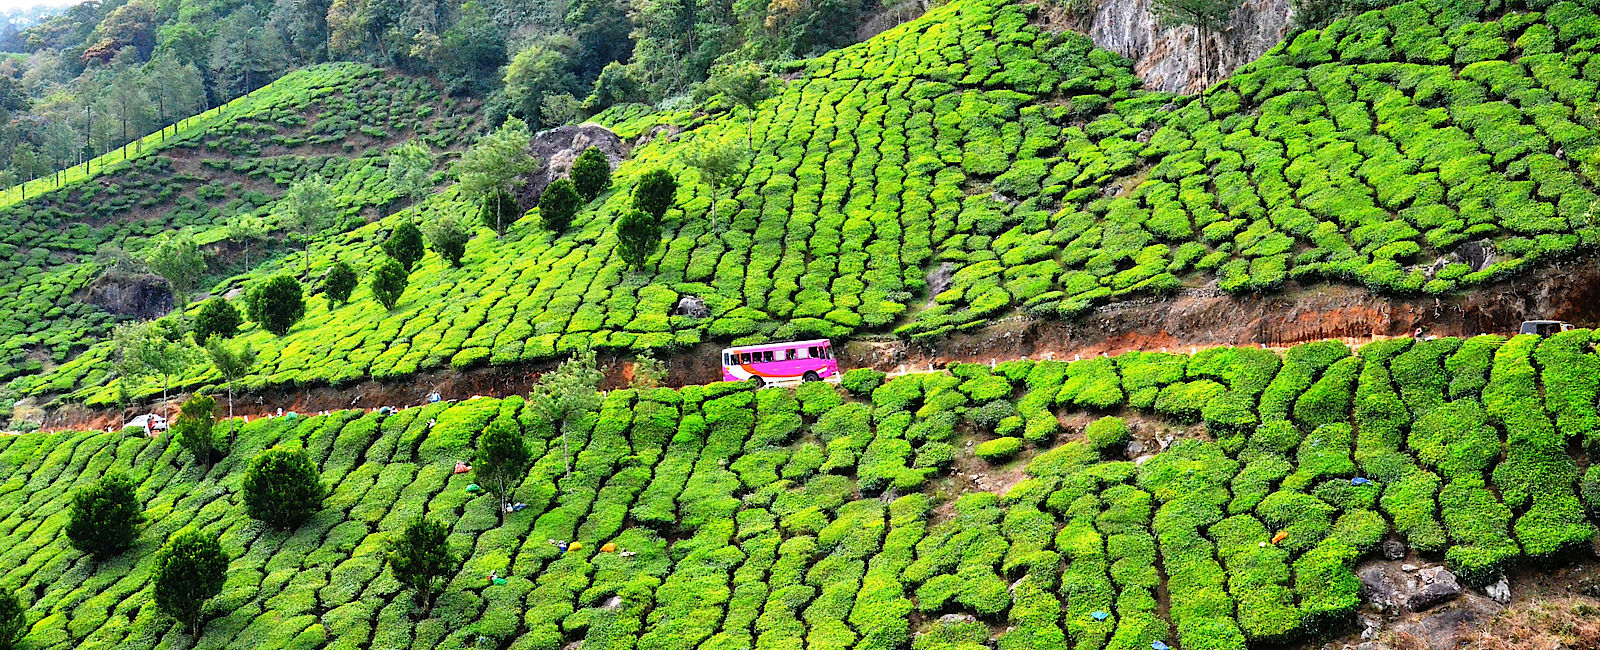 KERALA
 Urlaub in Kerala - Land der Kokospalmen 